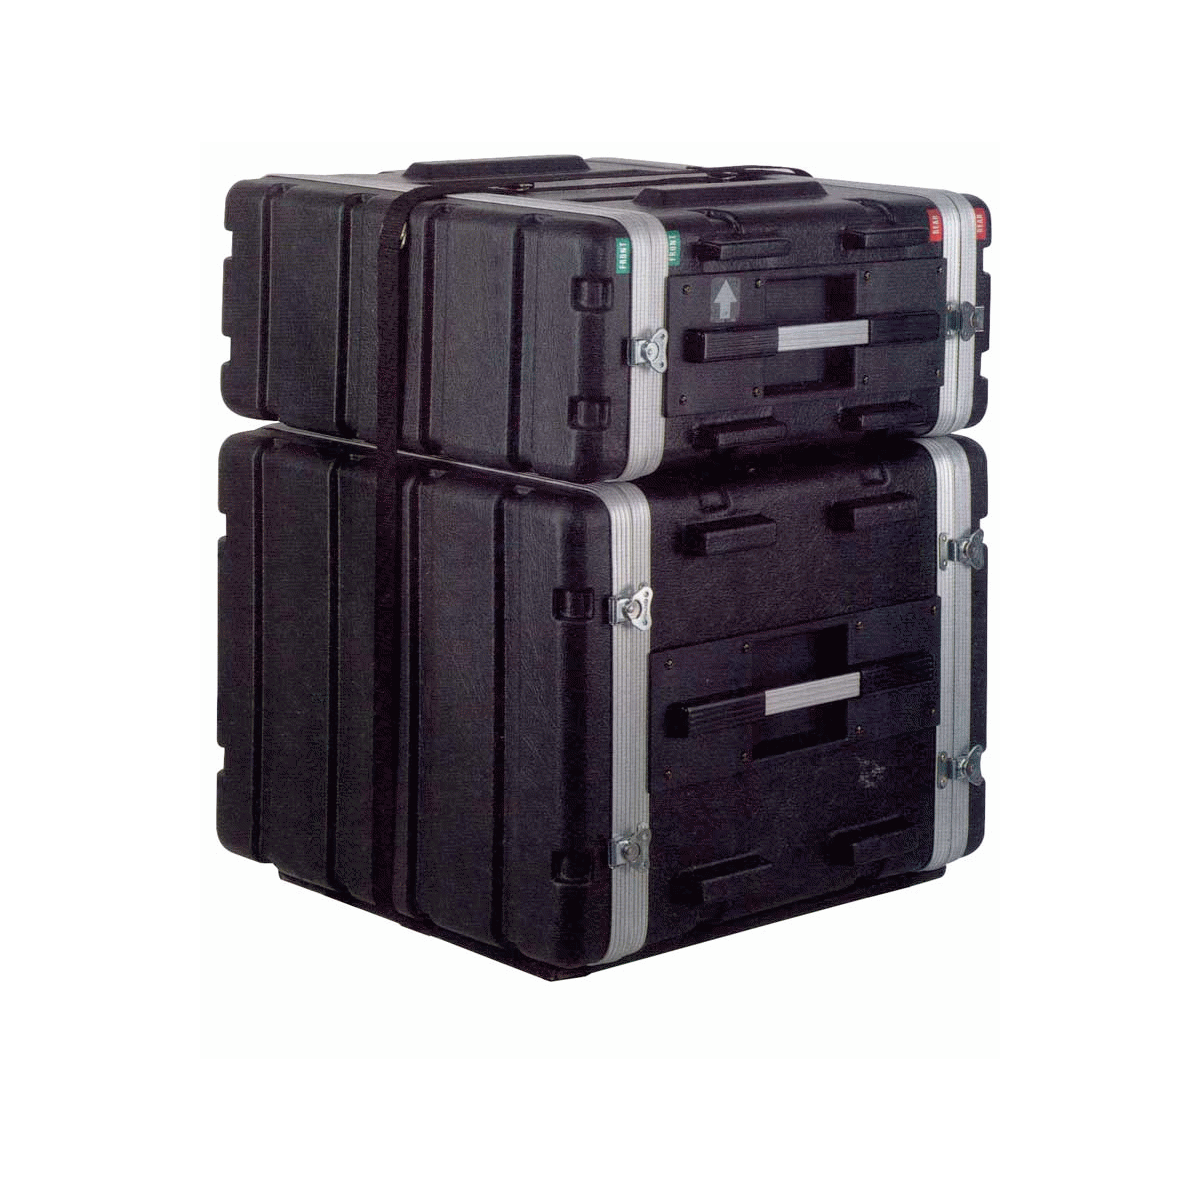 UXL DLX ABS 8RU Rack Case